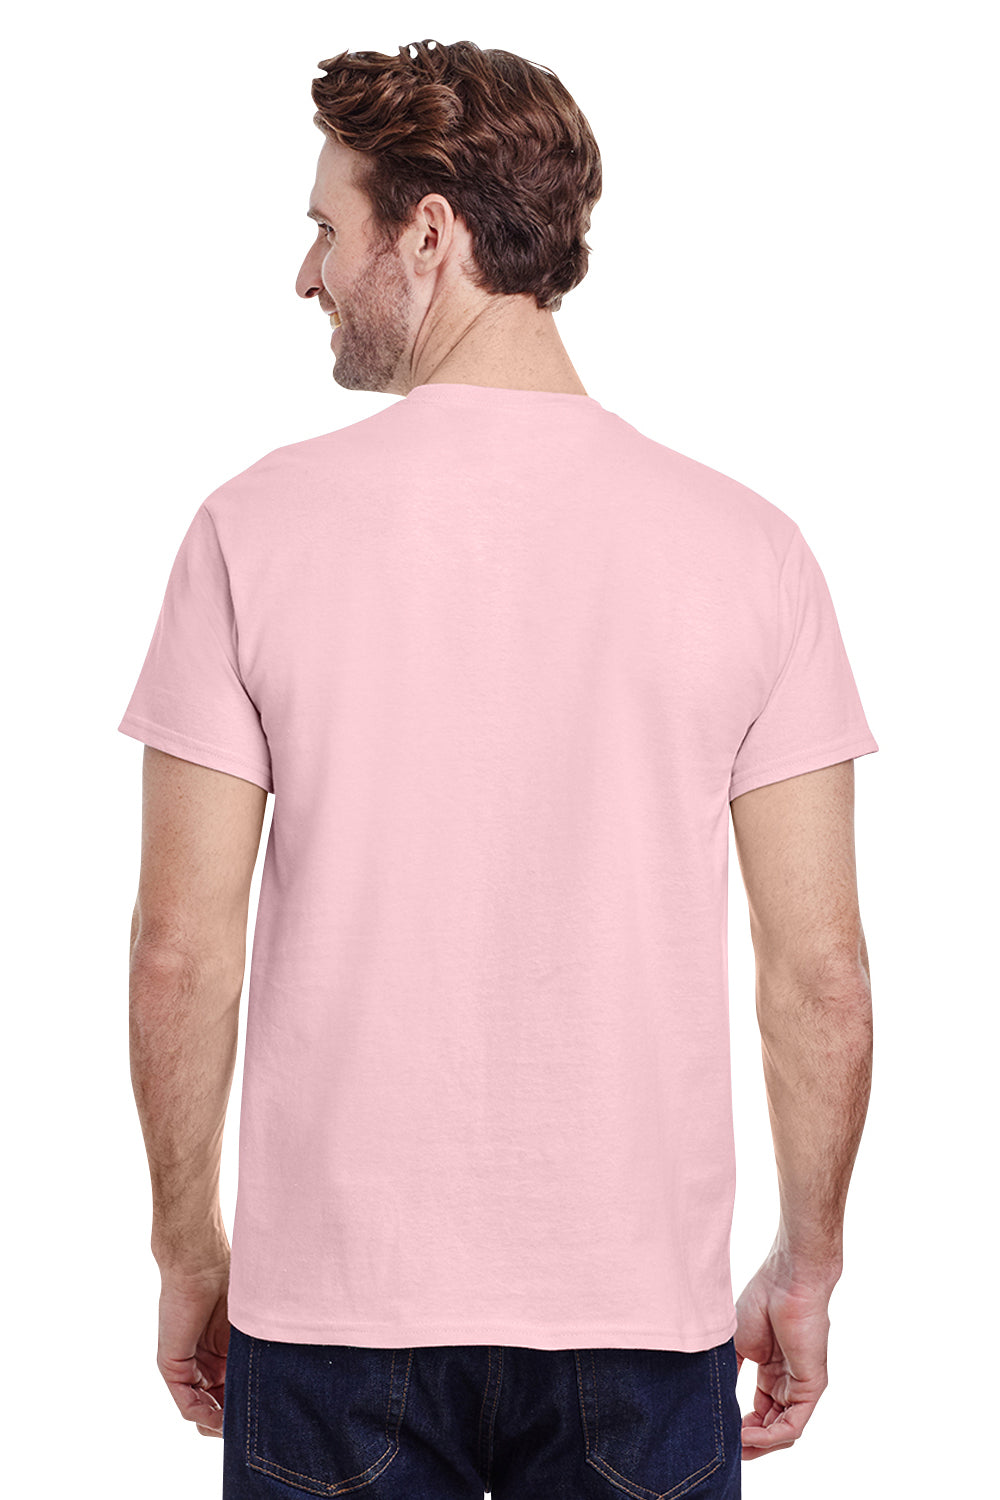 Gildan G500 Mens Short Sleeve Crewneck T-Shirt Light Pink Back